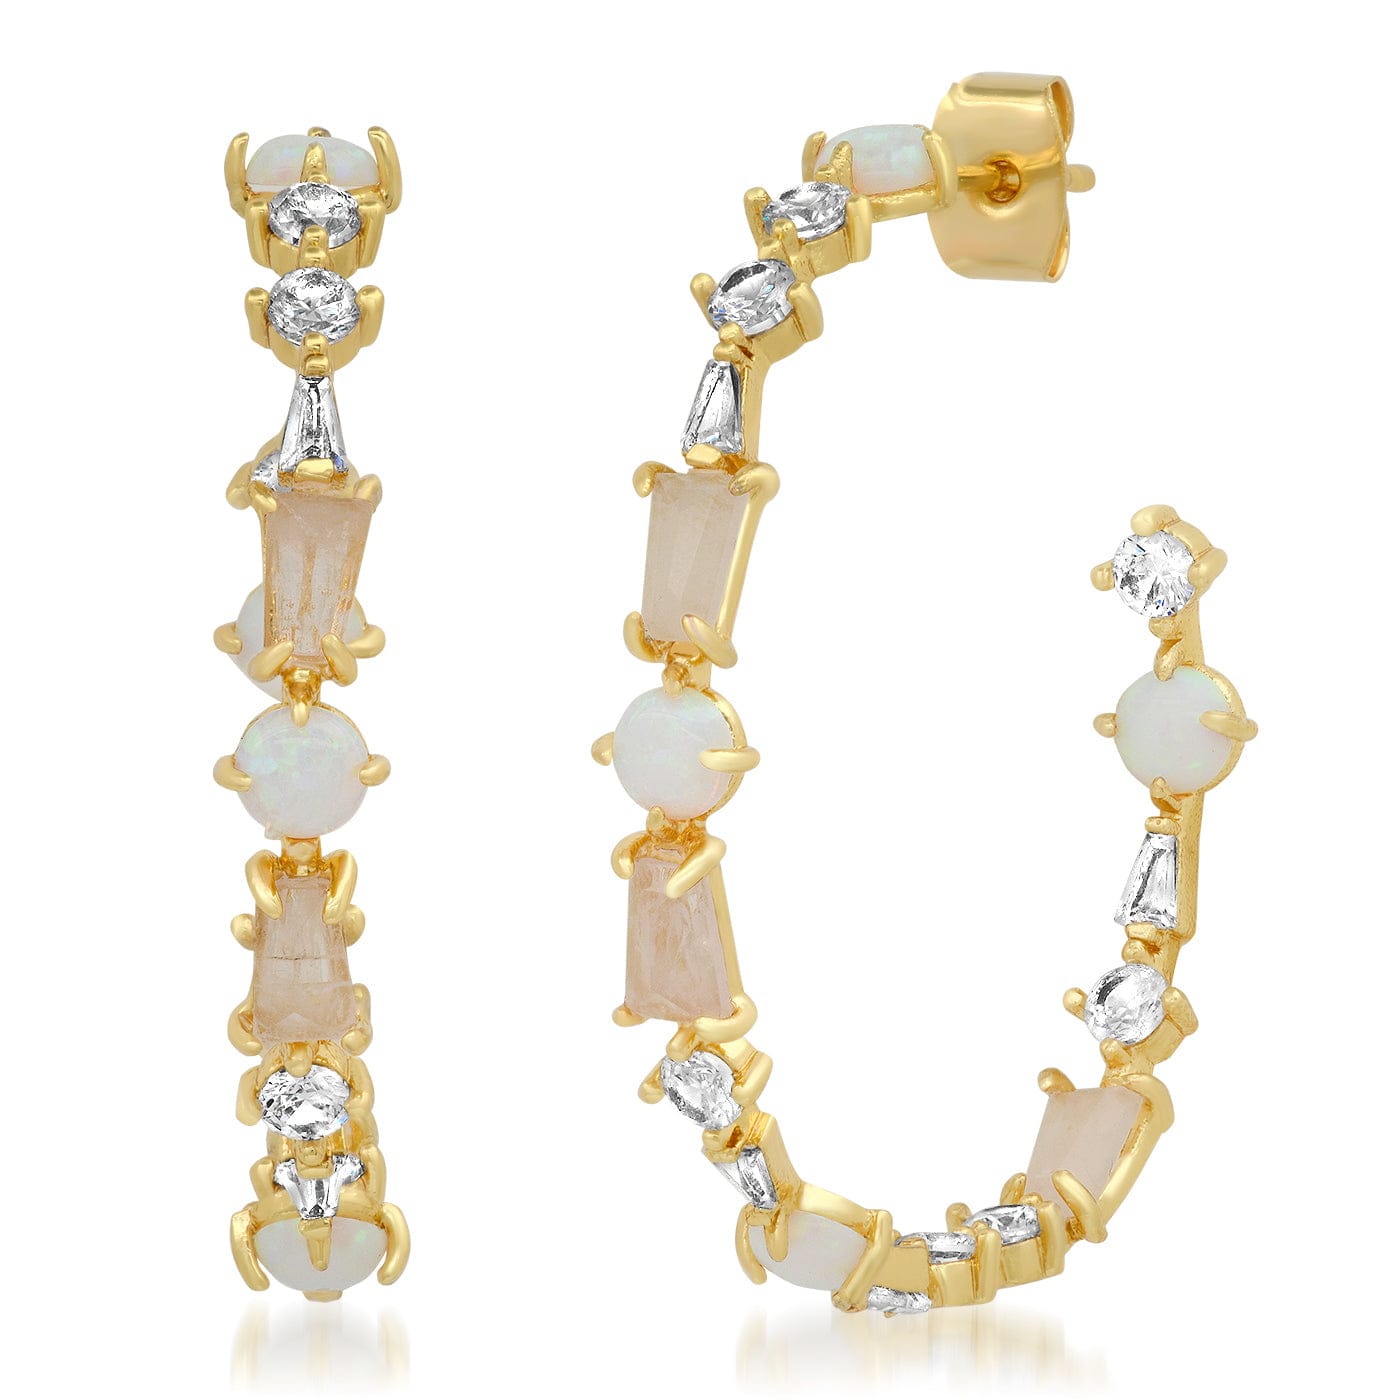 TAI JEWELRY Earrings Ivory Aqua Mosaic Crystal Hoop Earrings